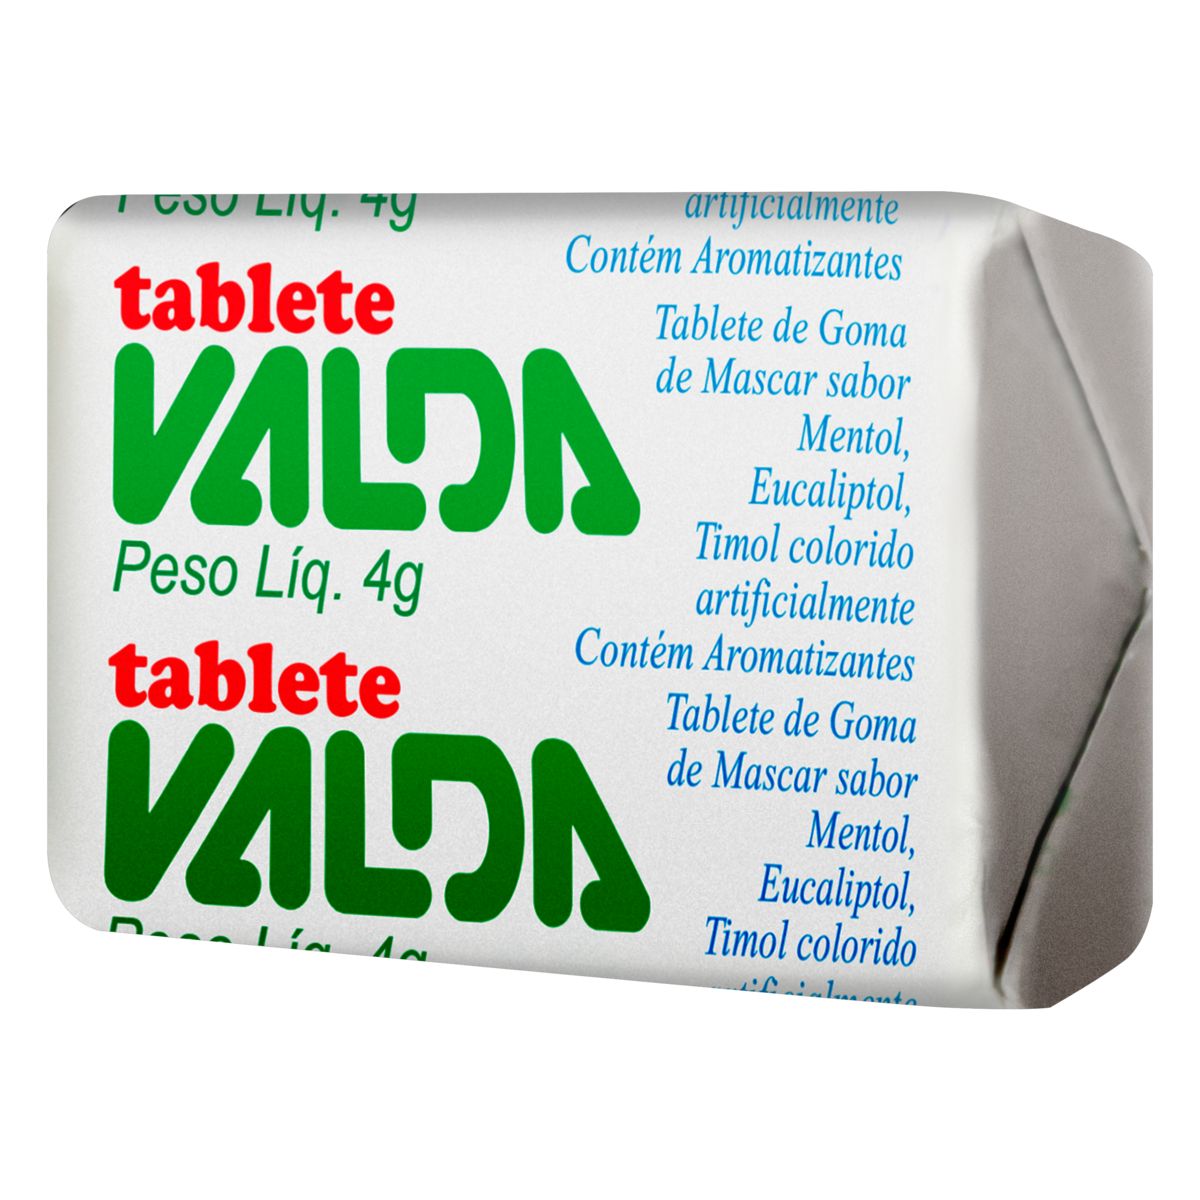 Tablete Valda 1 Unidade 4g